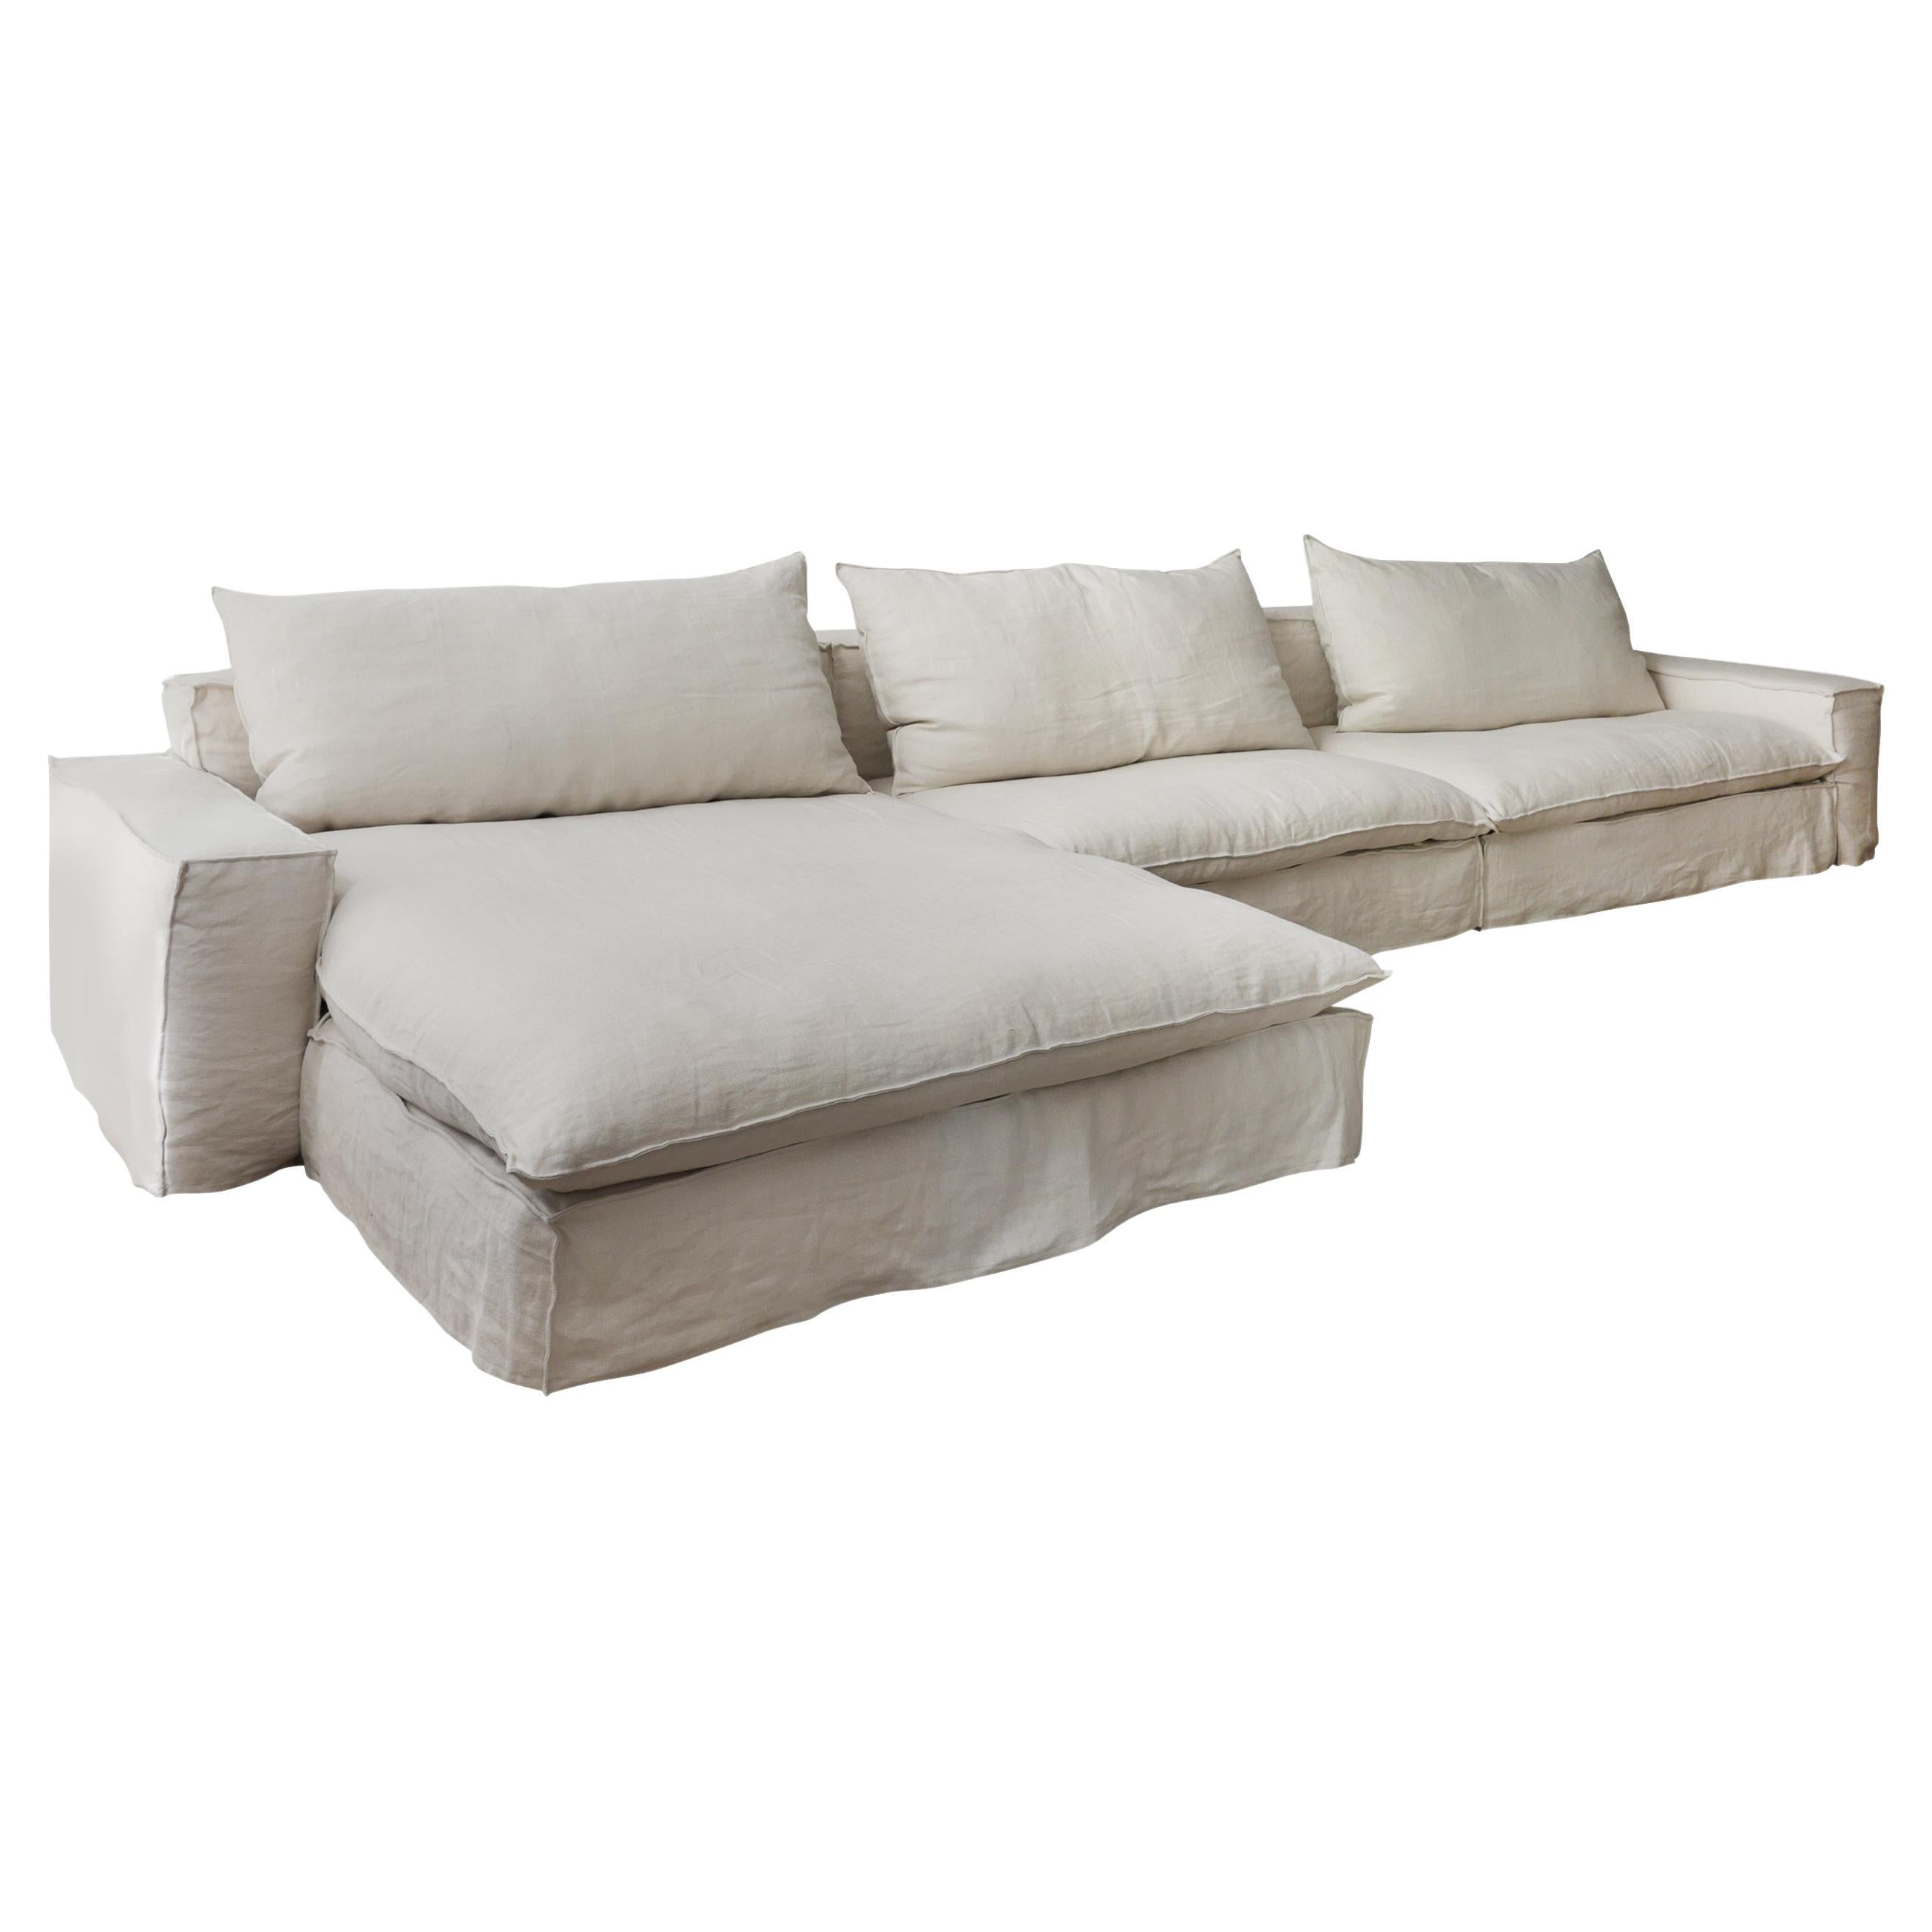 Pluma Sofa Set in Linen Color Fabric Upholstery